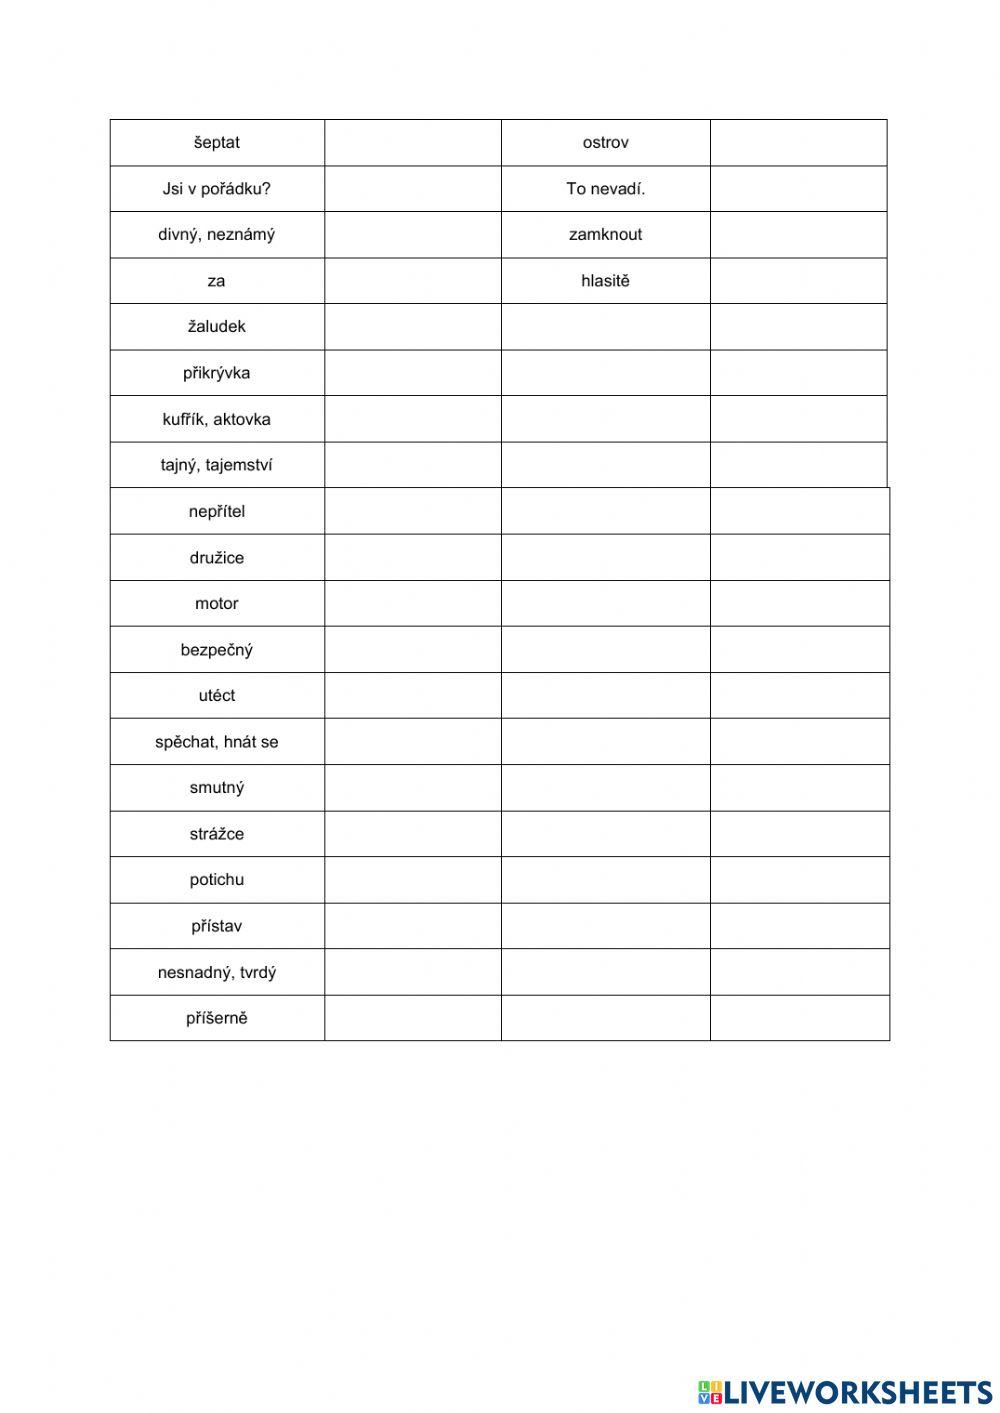 Vocabulary unit 6 Project 2